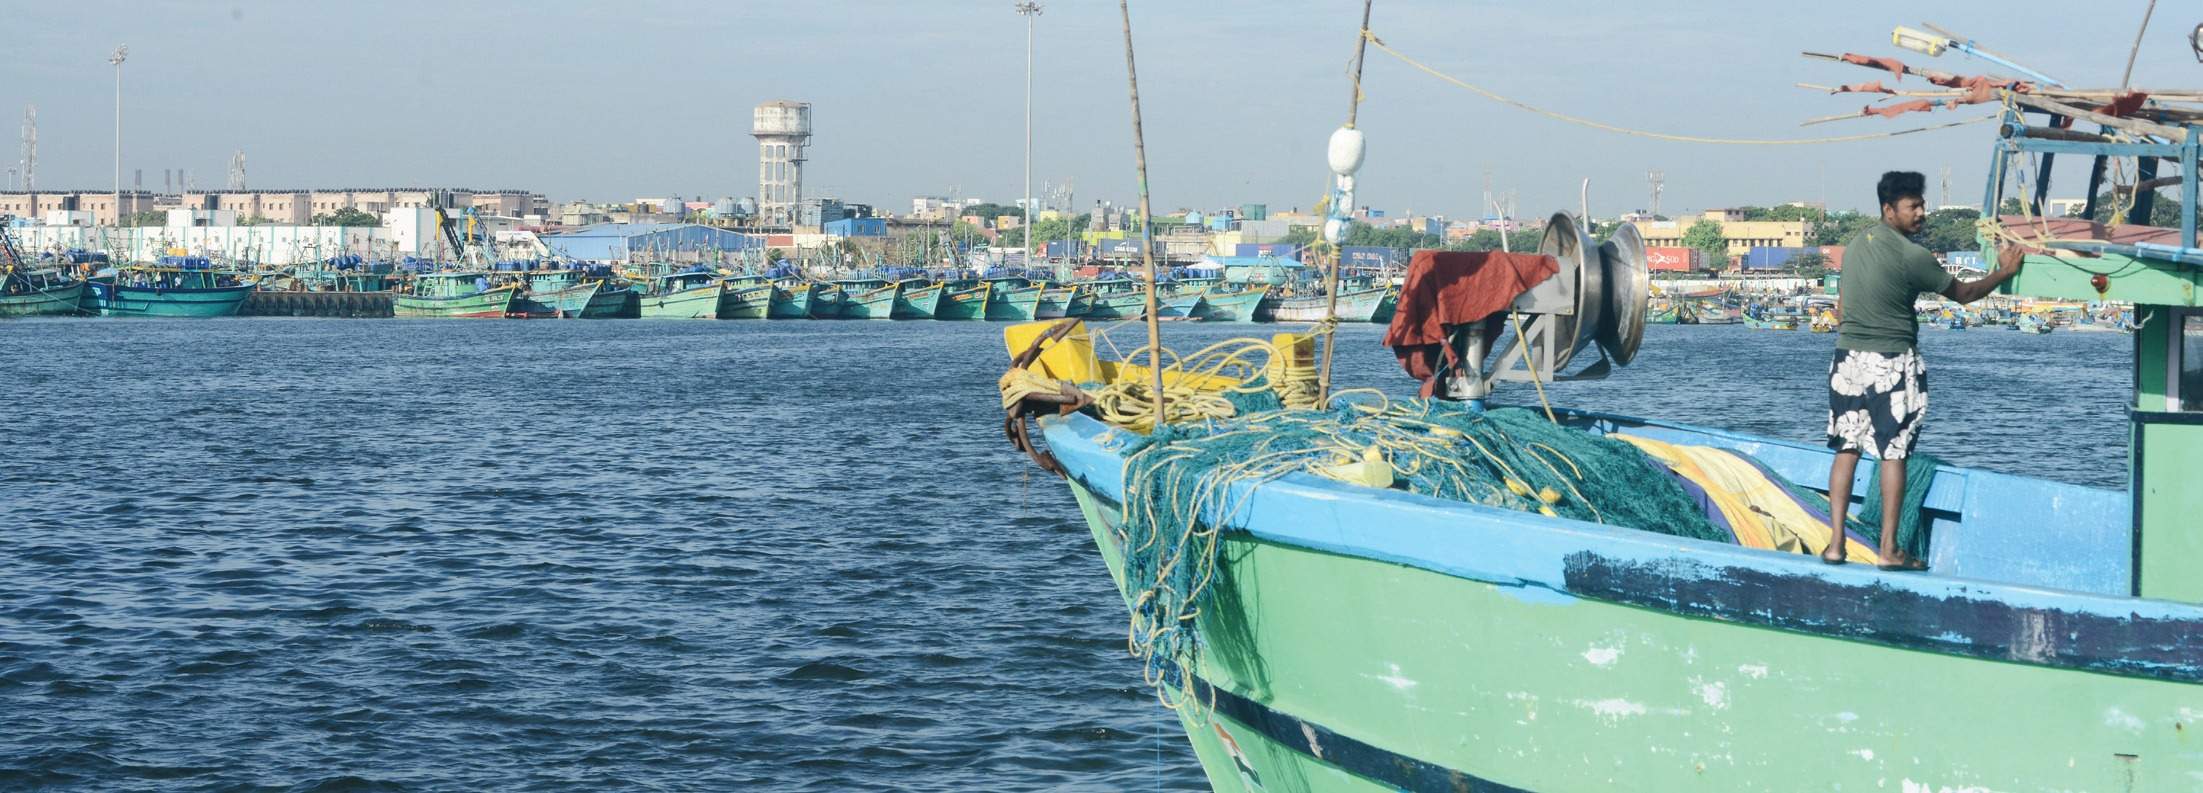 Sri Lankan Navy kills one ,Sri Lankan Navy injures Indian Fisherman ,Fisherman Killed by Sri Lankan Navy, Indian Fisherman Shot Dead, Sri Lankan Navy,national news,international news,political news,Indian fisherman killed,Sri Lankan Navy Shoots At Indian Fishermen